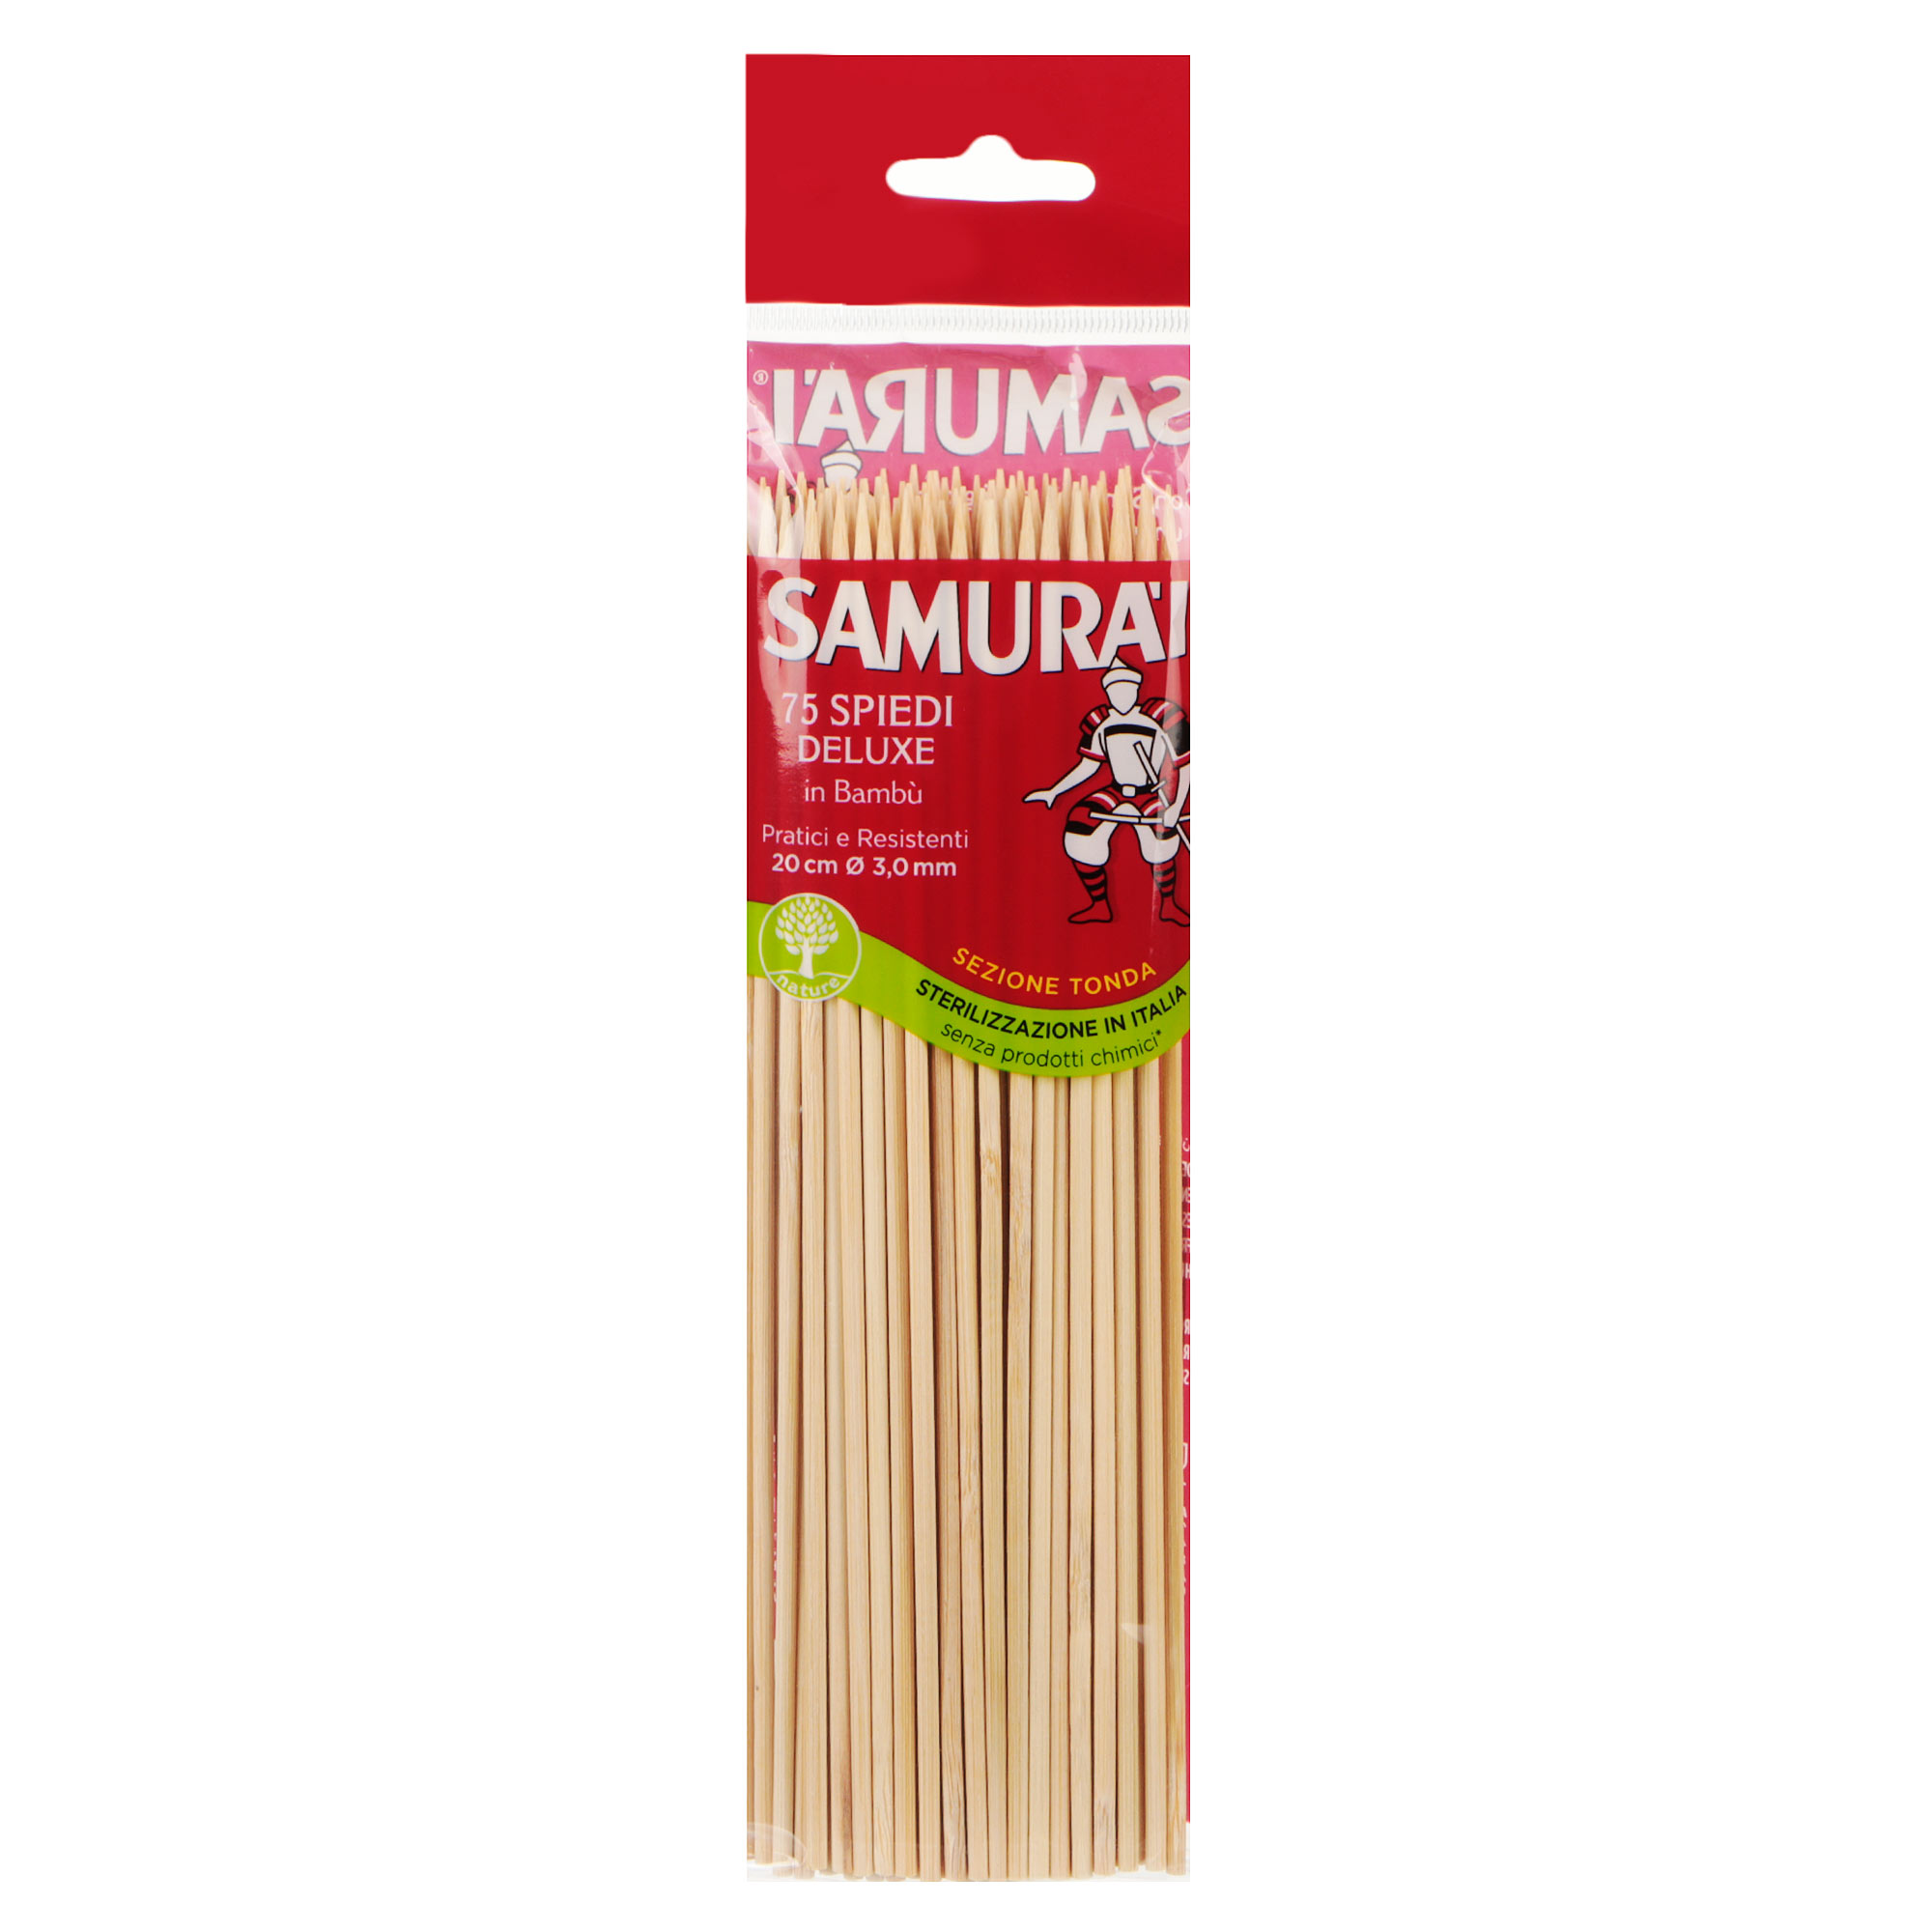 Шпажки бамбуковые Sisma Samurai 20 см 75 шт